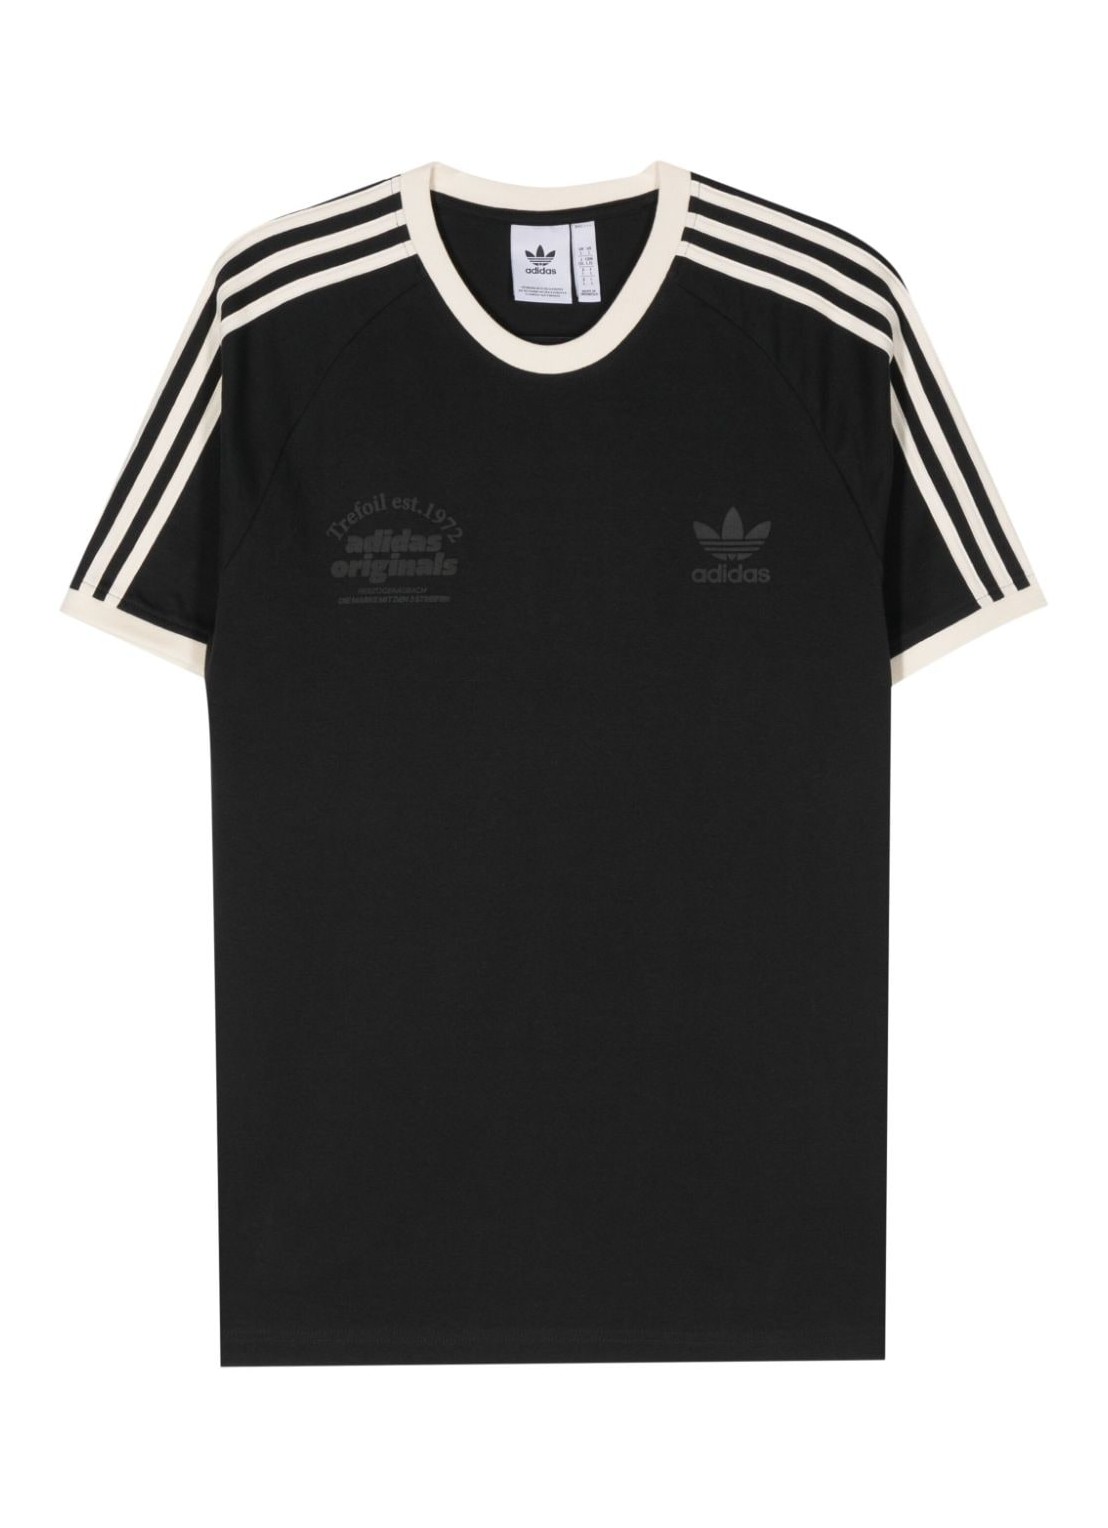 Camiseta adidas originals t-shirt mangrf tee - is1413 black talla XL
 